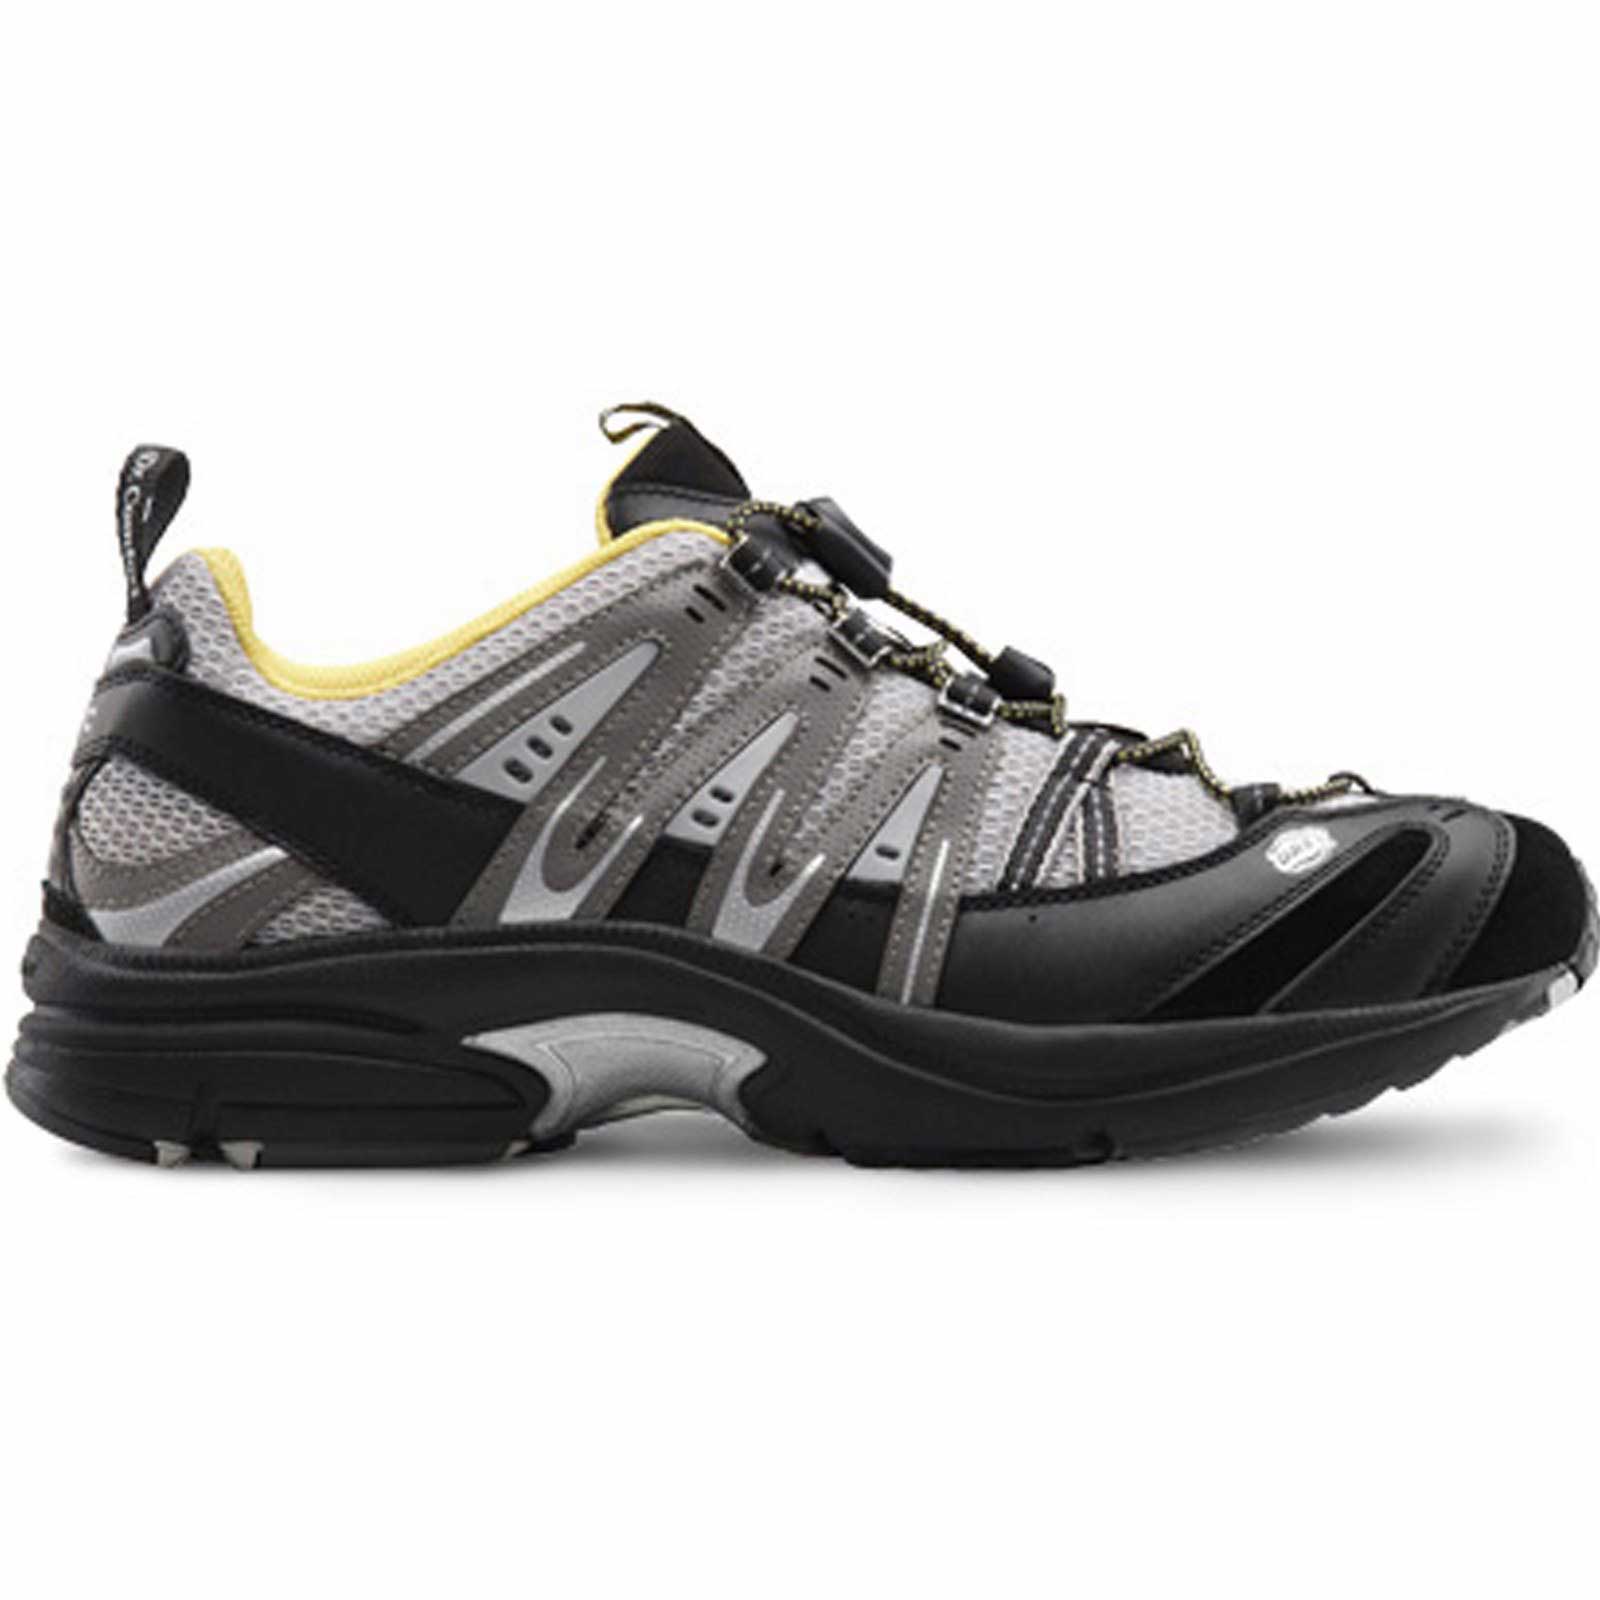 Dr. Comfort Performance Men's Athletic Shoe: 7.5 Wide (E/2E) Metallic/Red Elastic & Standard Laces - image 5 of 5